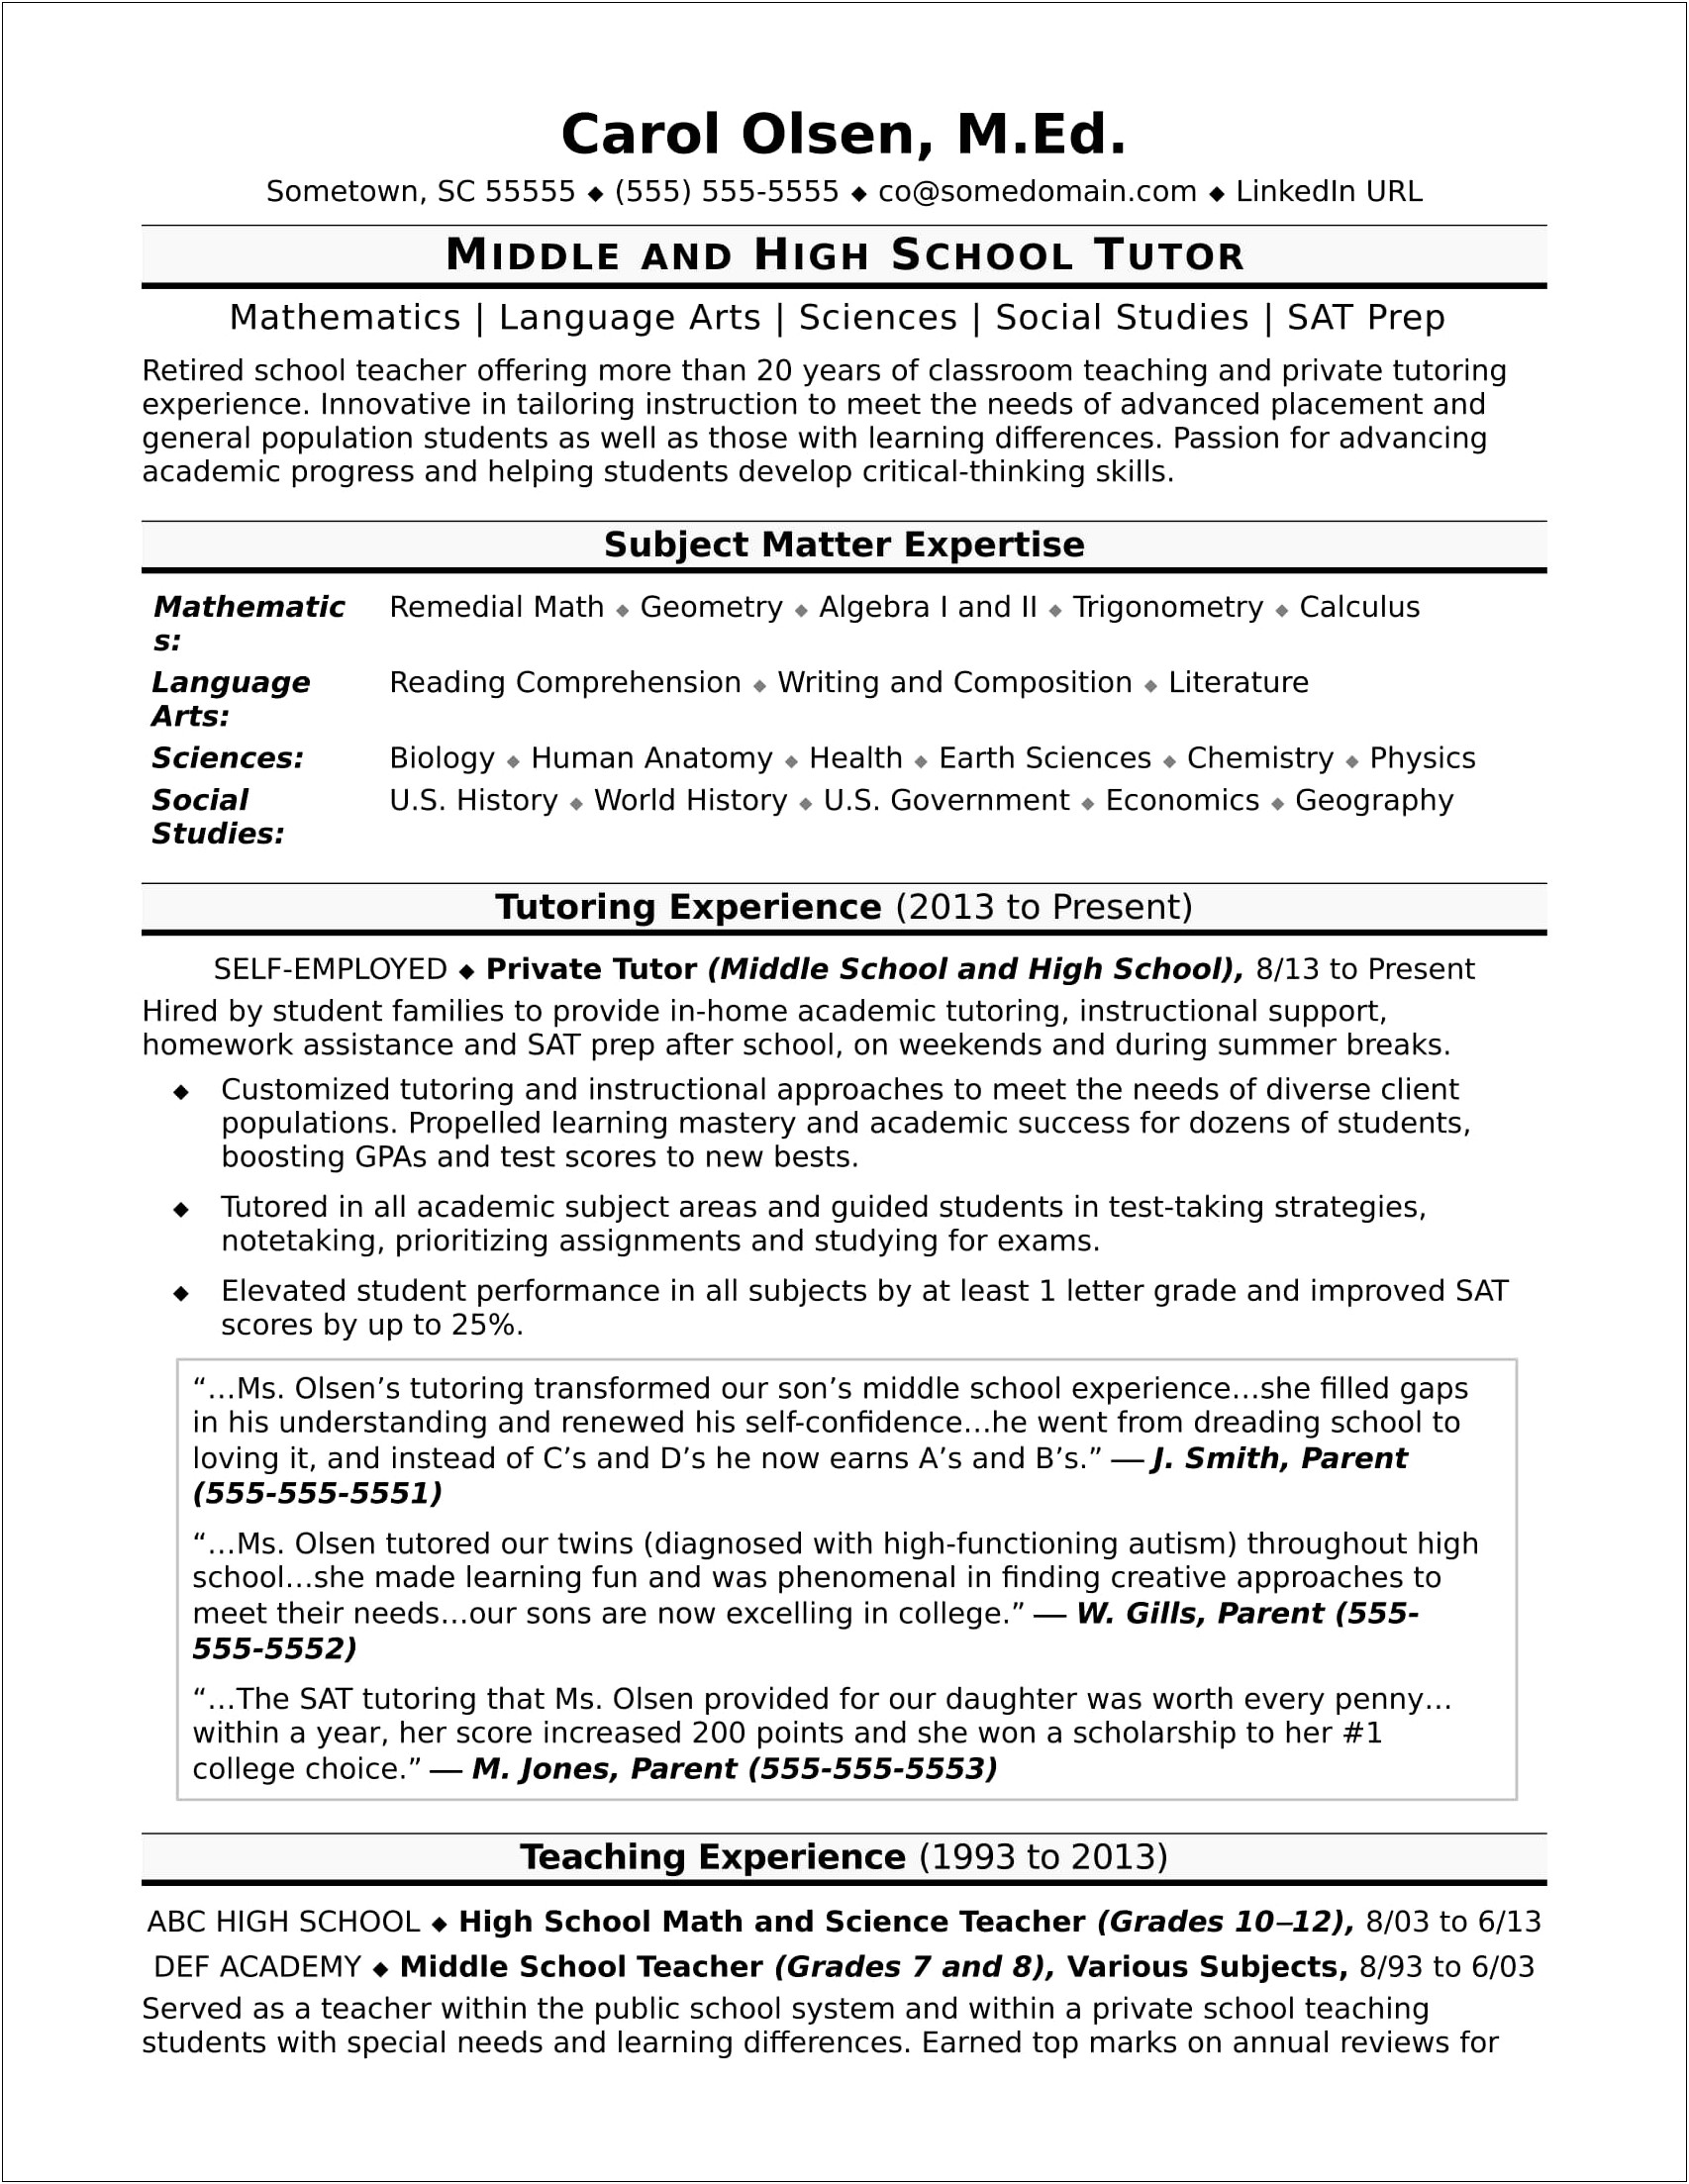 Resume Description For Elementary School Tutor